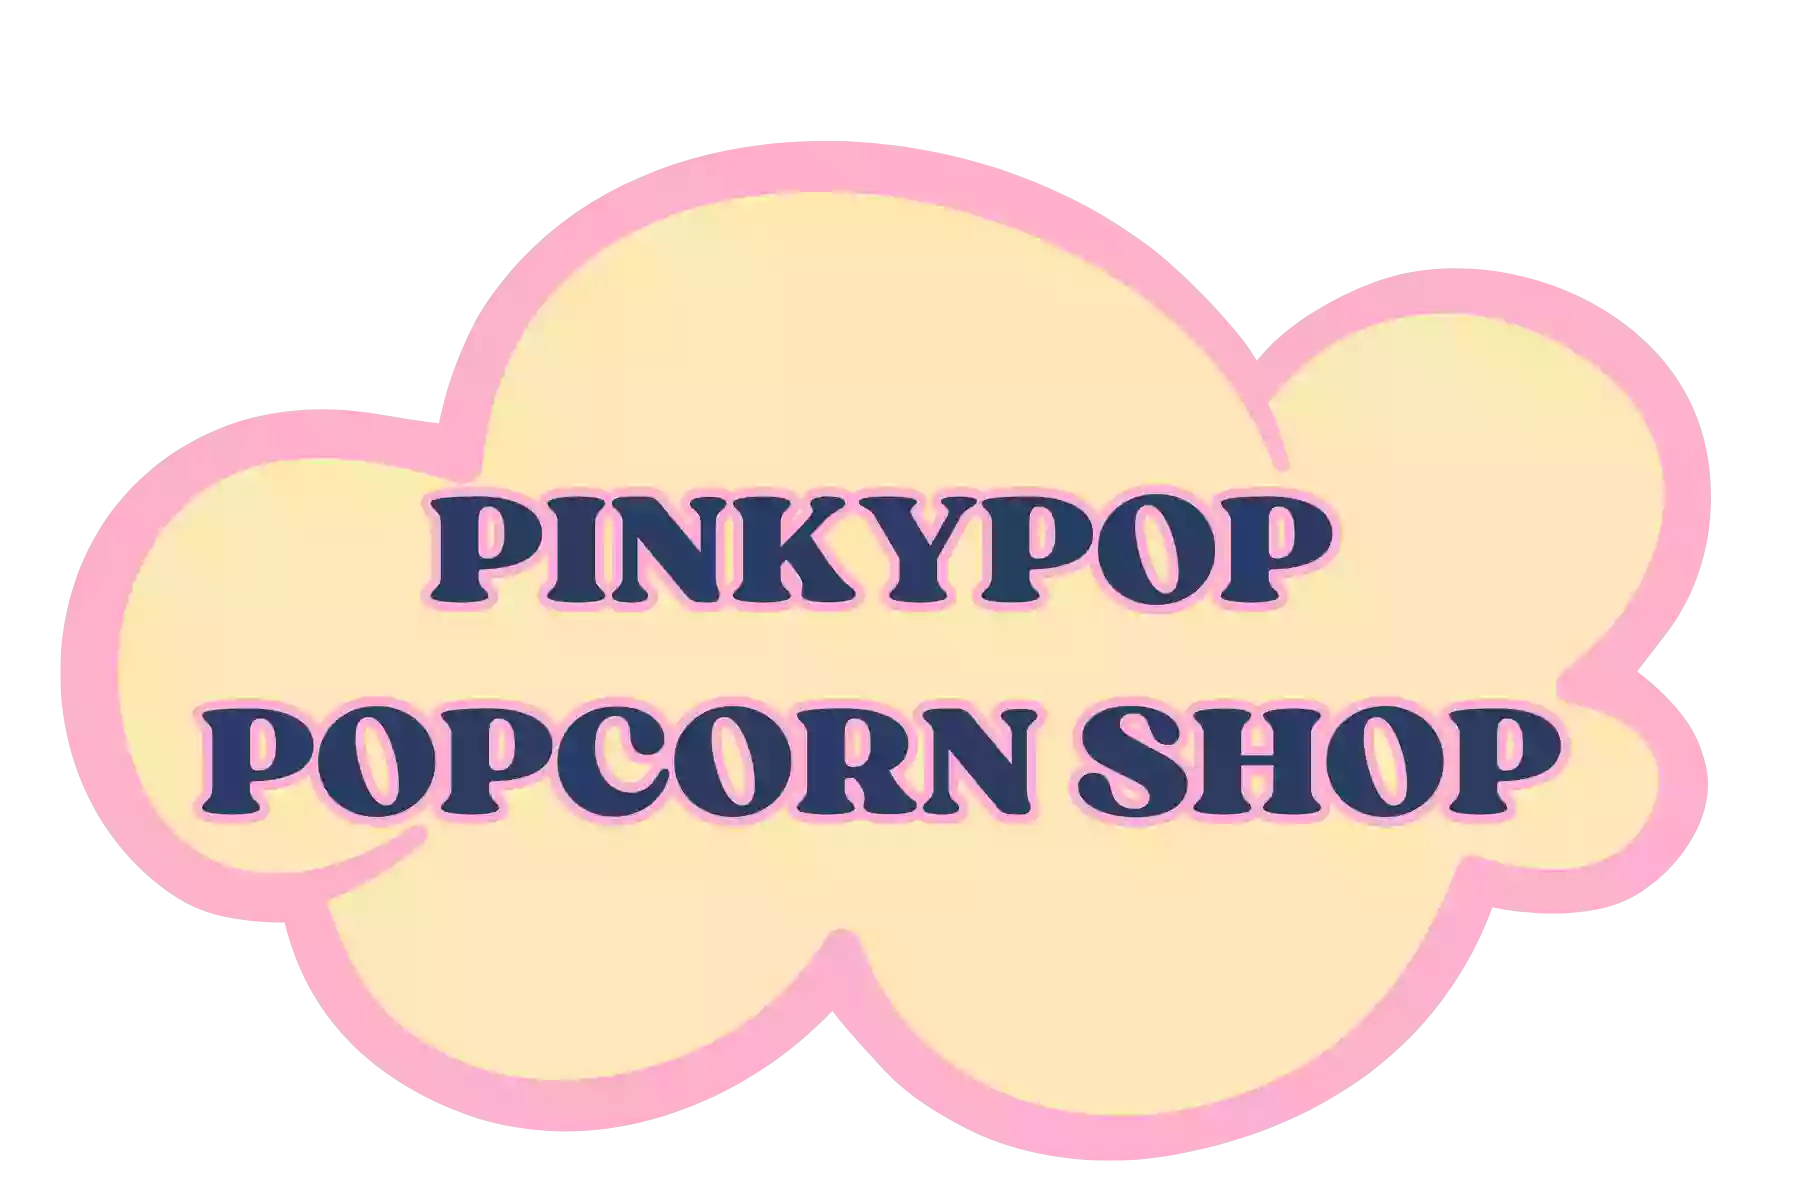 PINKYPOP POPCORN SHOP